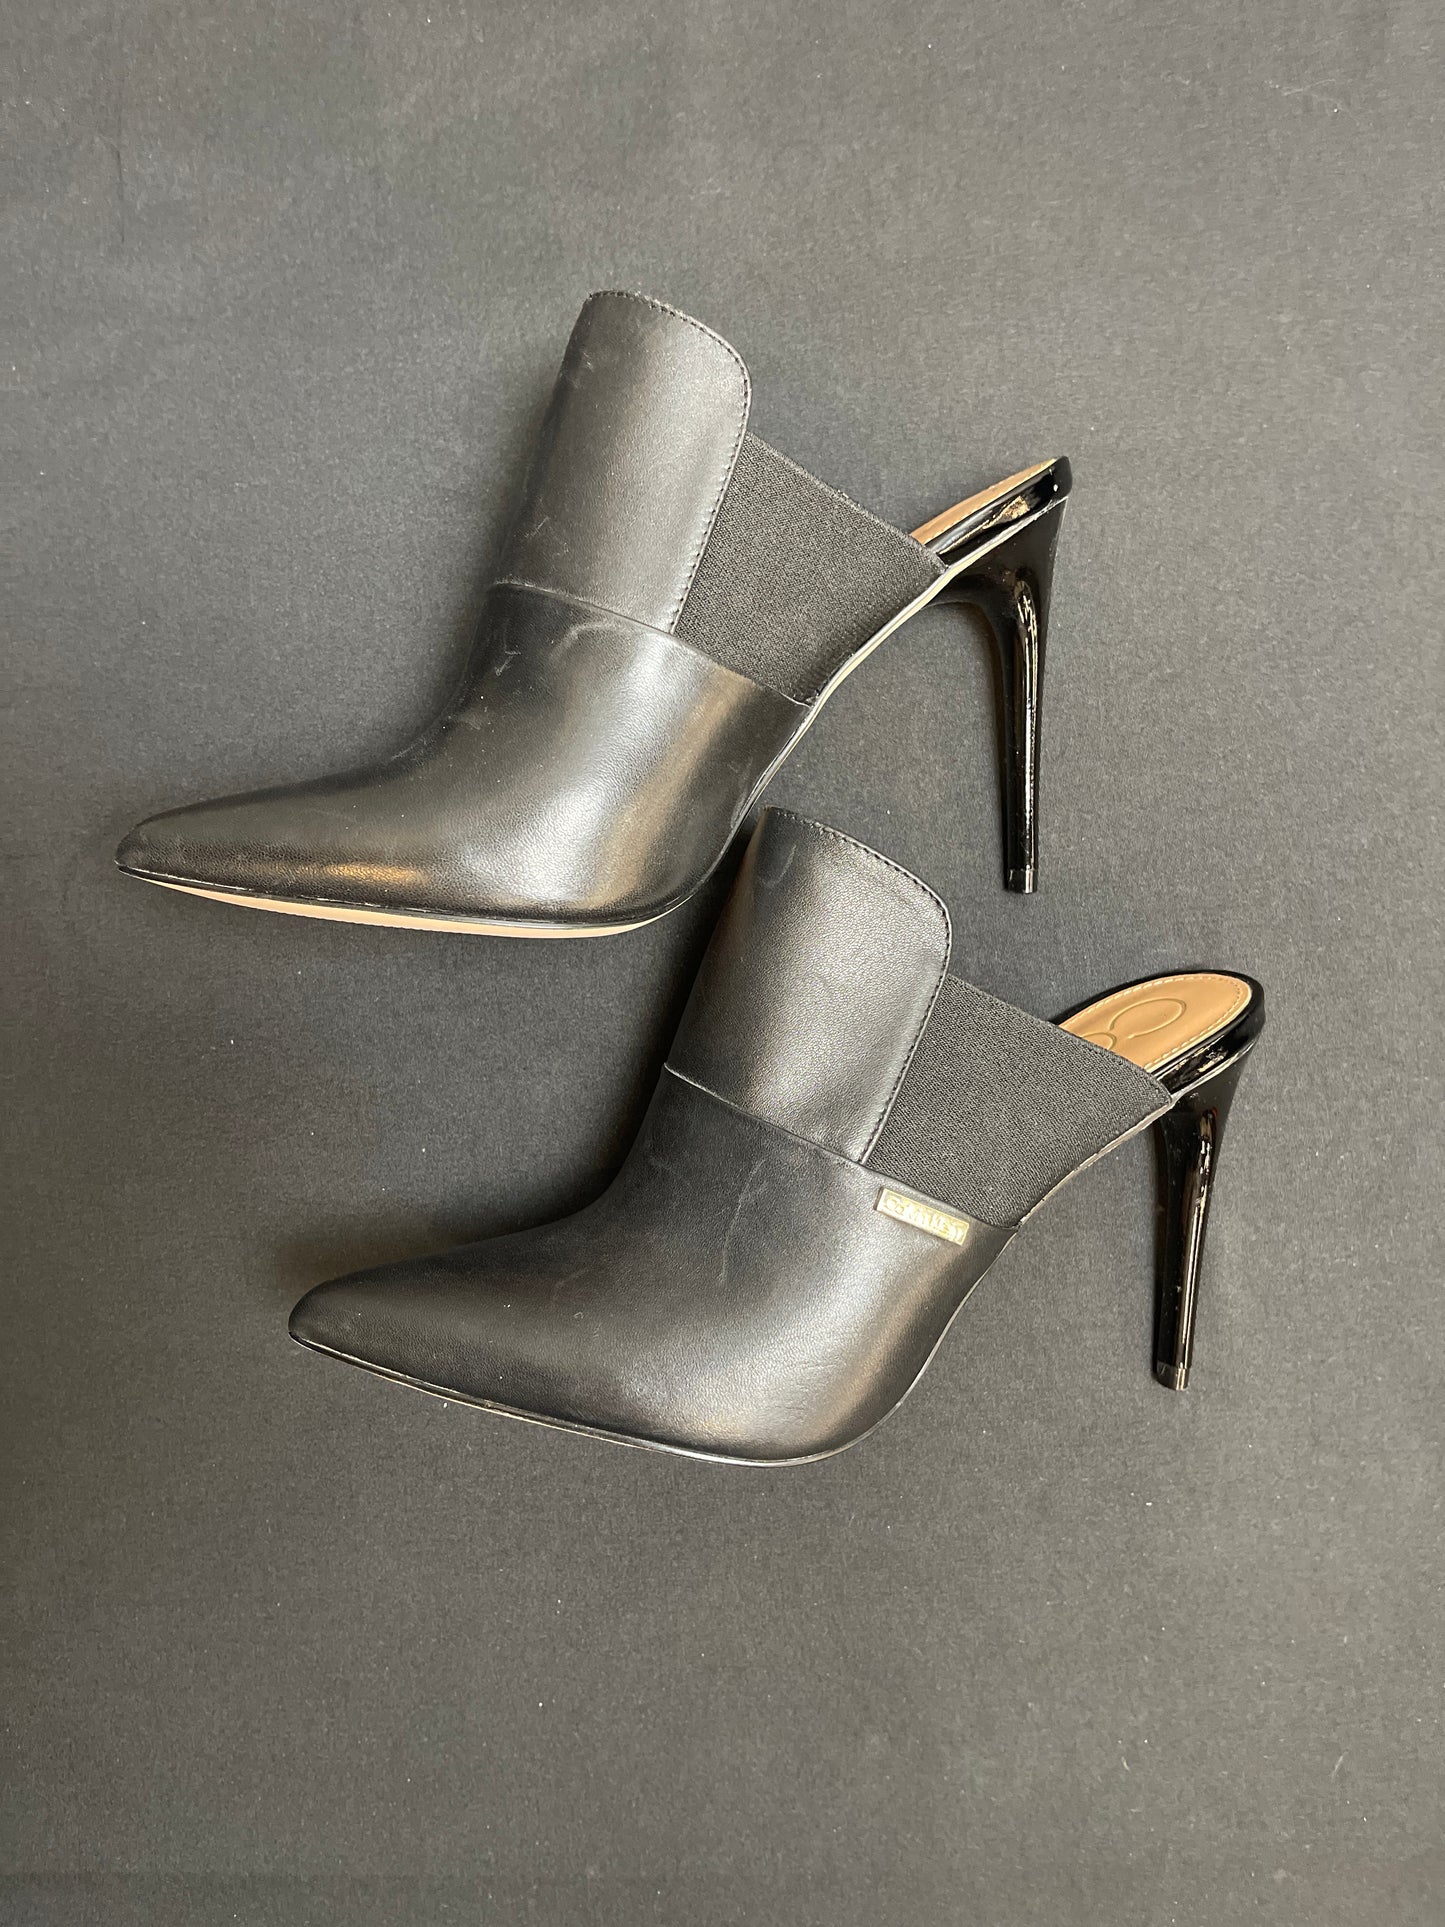 Shoes Heels Stiletto By Calvin Klein  Size: 6.5